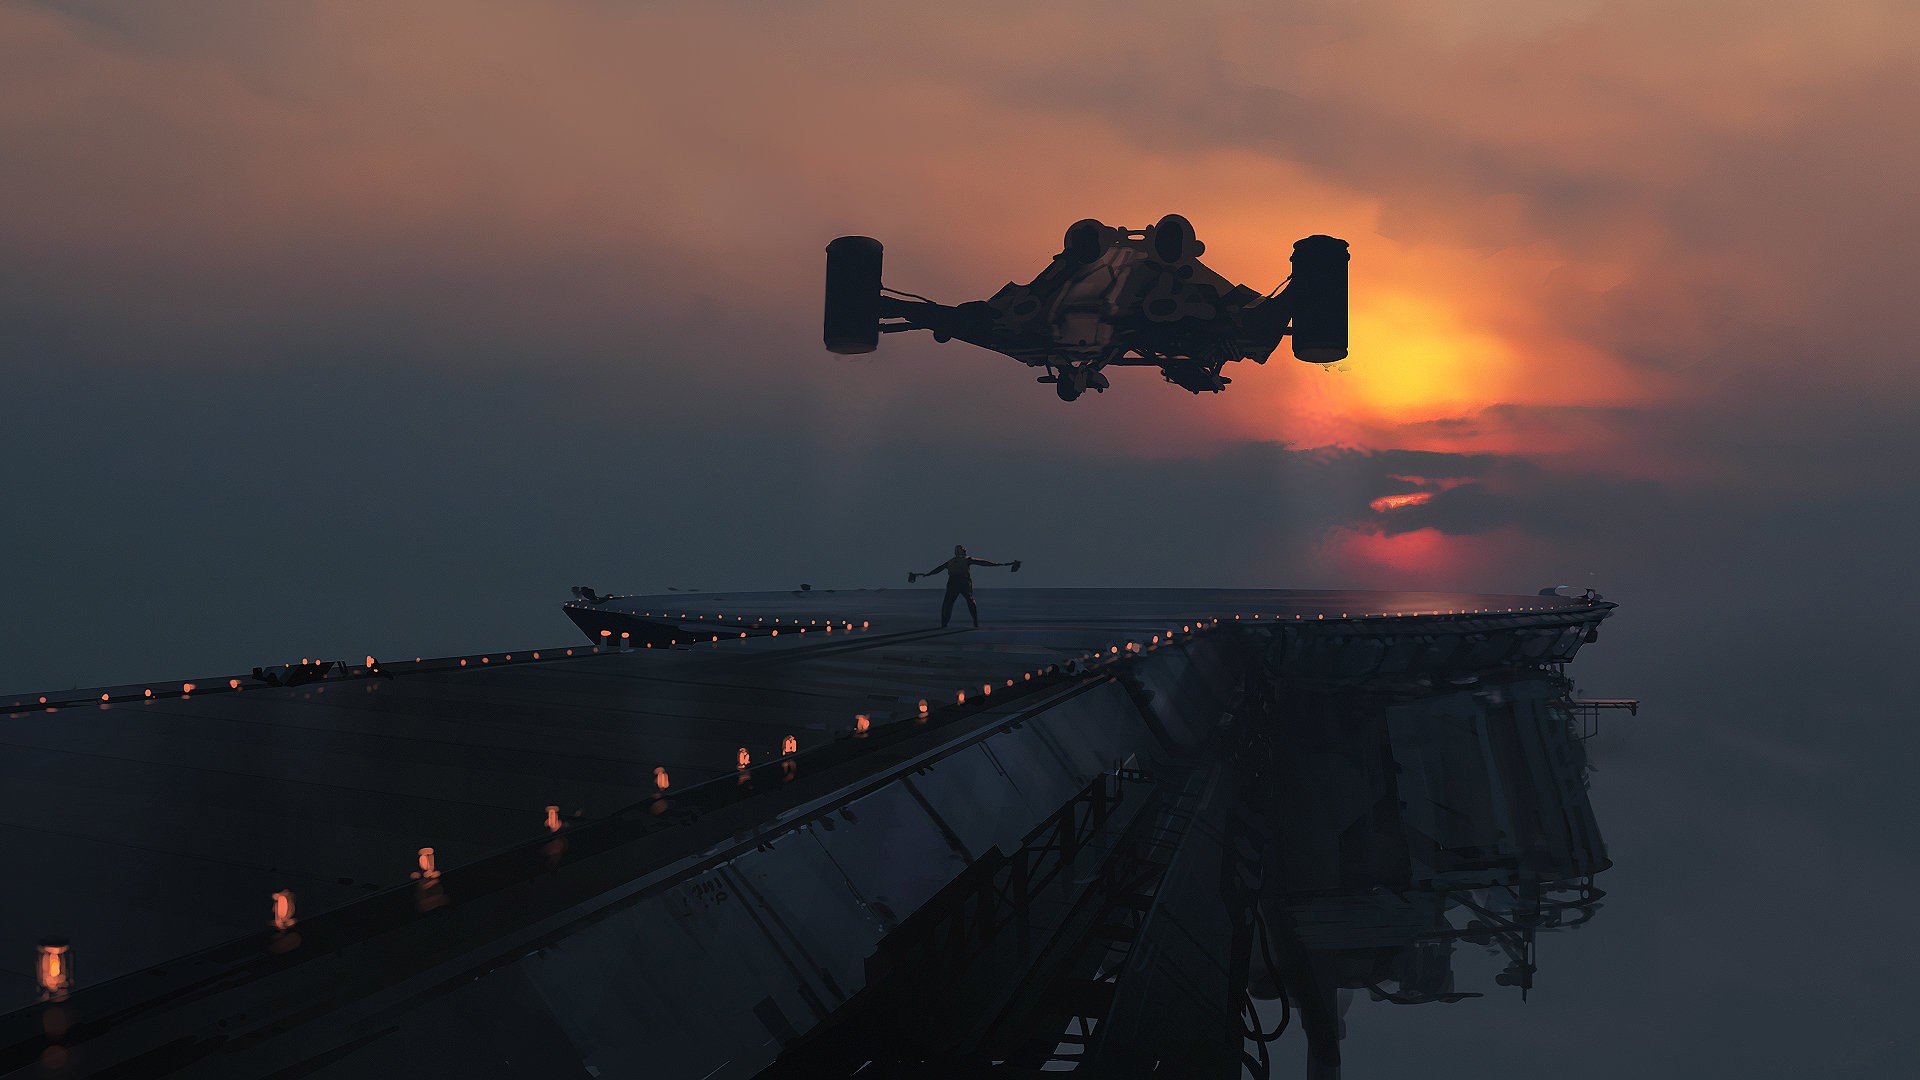 General 1920x1080 science fiction aircraft futuristic vehicle digital art sky CGI sunlight